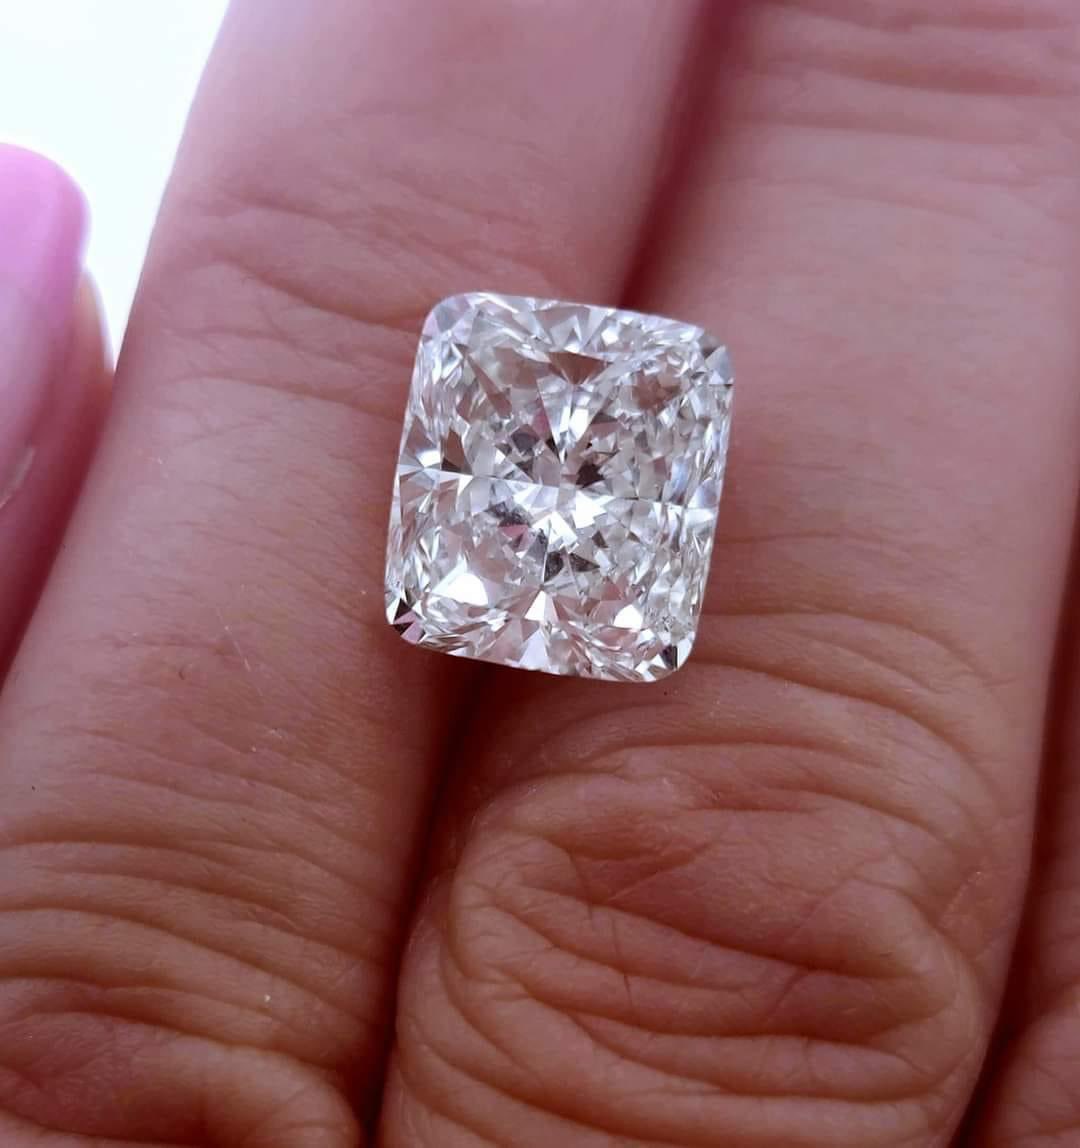 Size matters #natural #naturaldiamond #cushion #ethicallysourced #SanDiego #sandiegojewelry